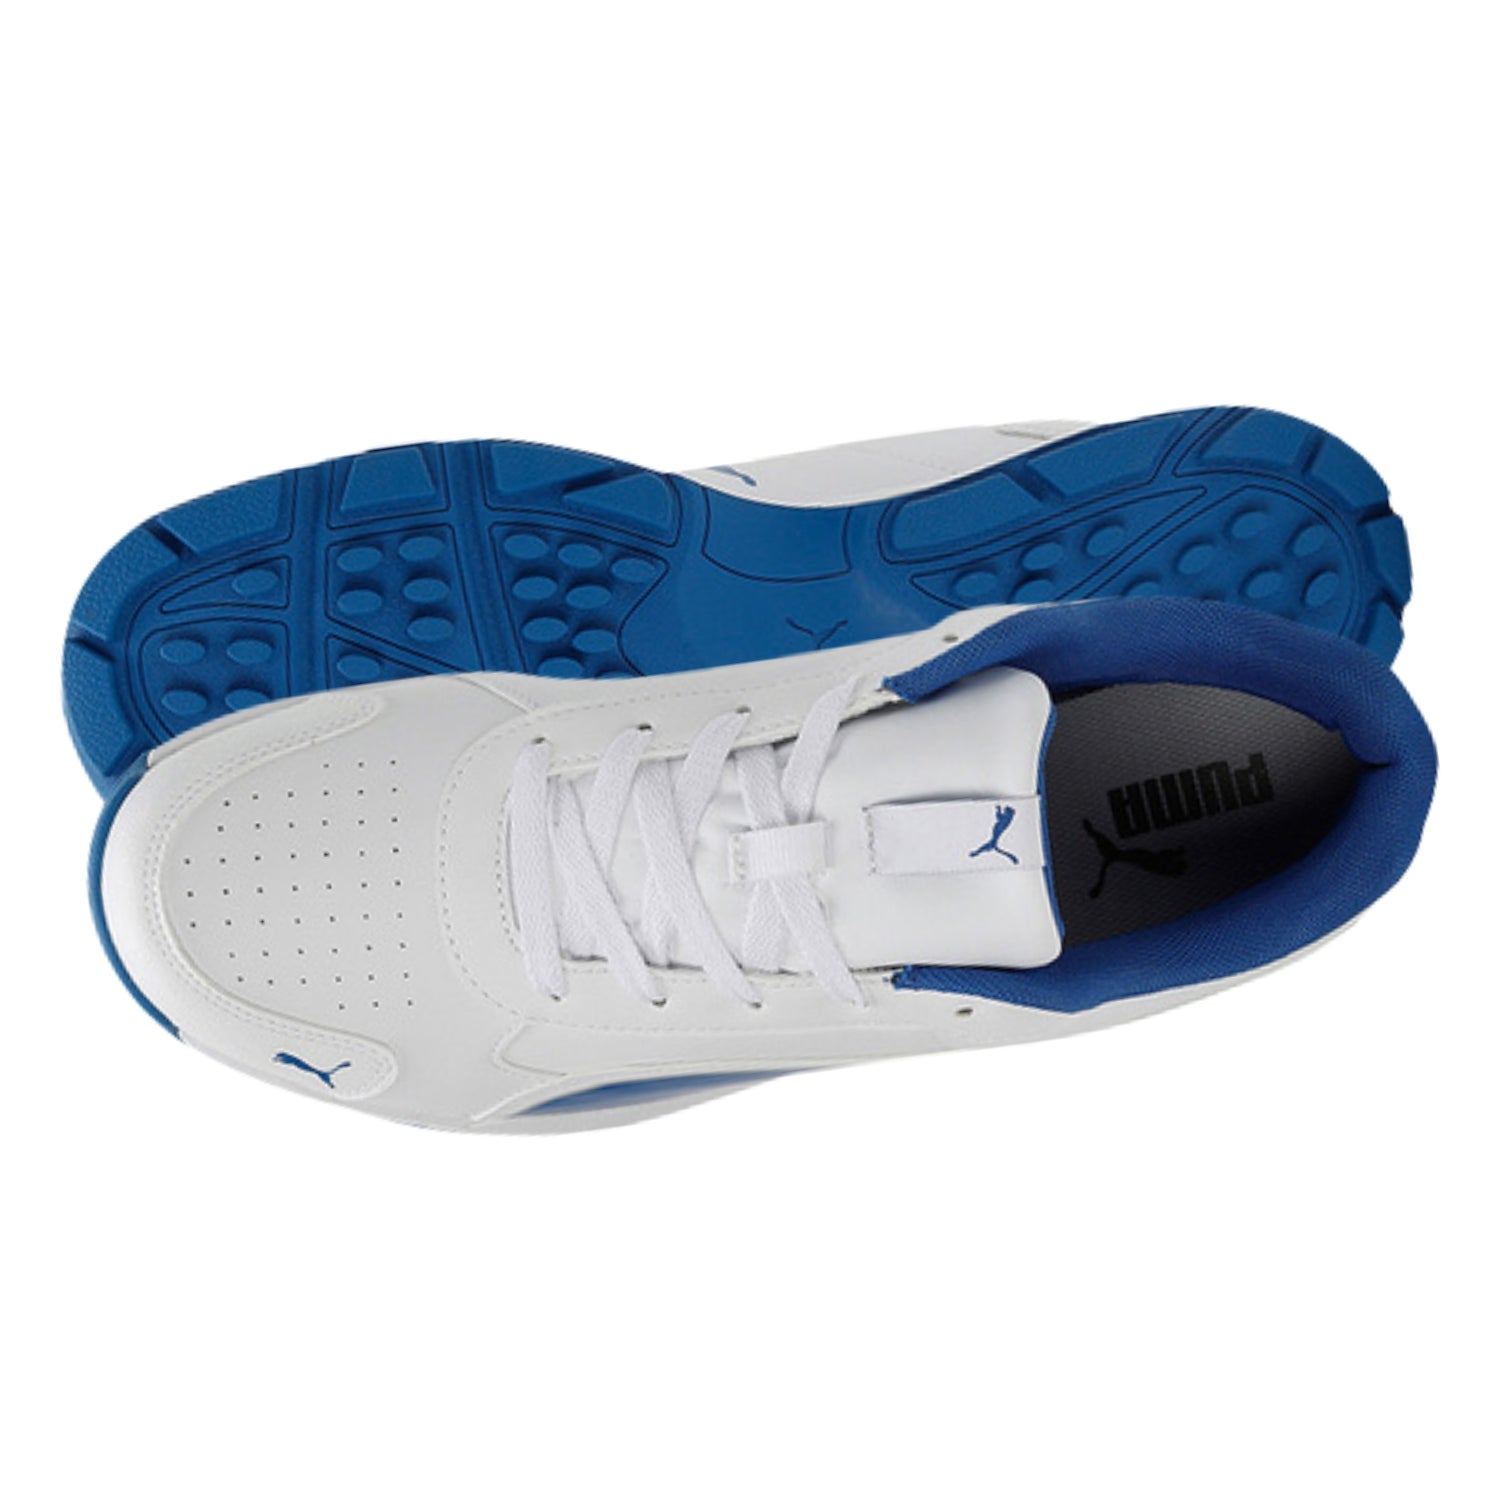 Puma Cricket Shoes, Model Classic Cat, White/Blue